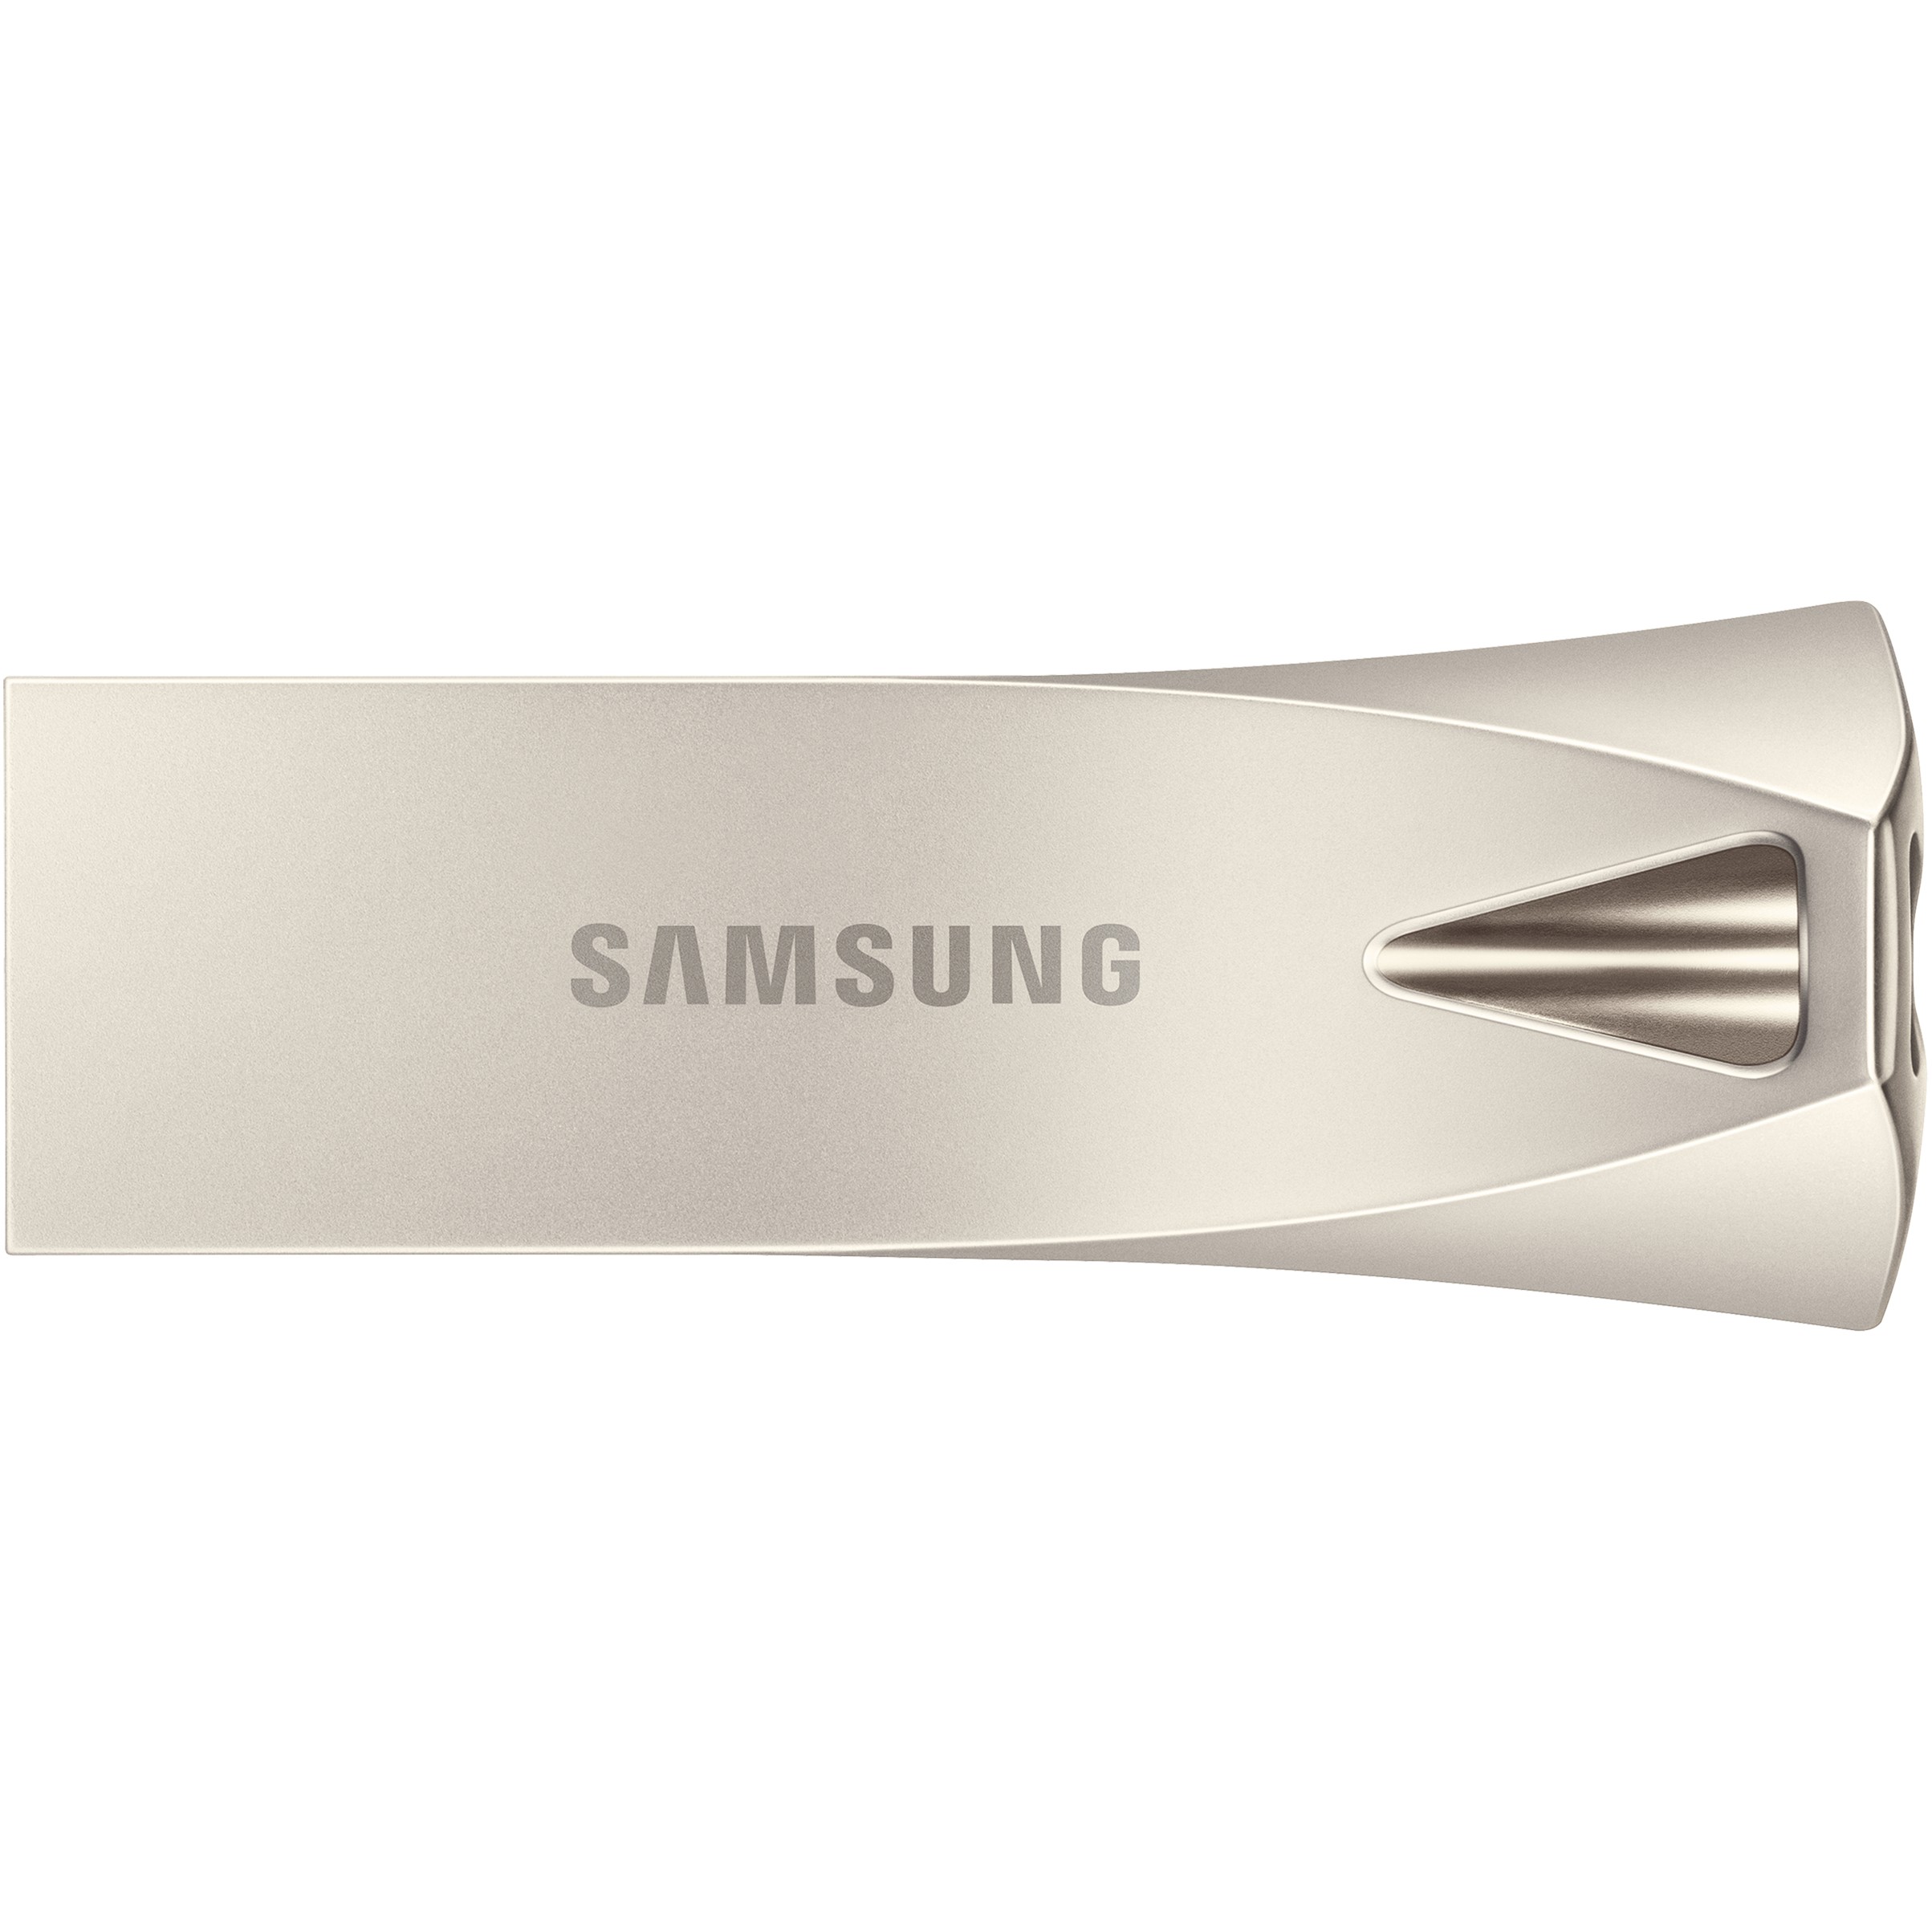 SAMSUNG MUF-128BE3/APC, USB-Sticks, Samsung MUF-128BE  (BILD1)